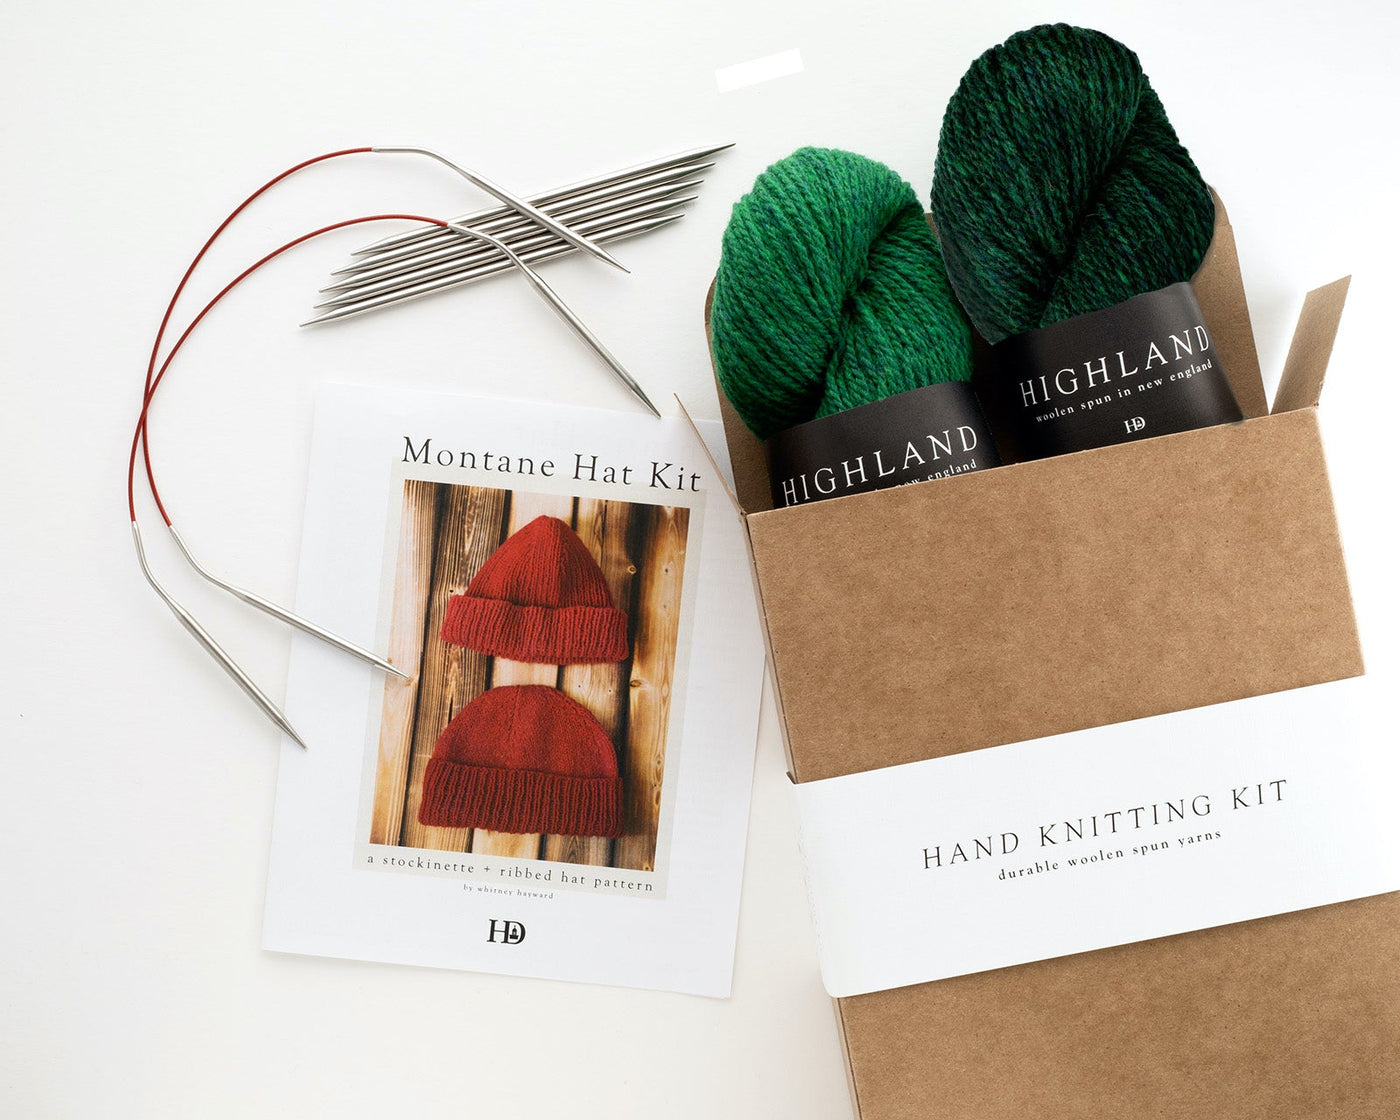 Hand Knitting Kit - Montane Hat